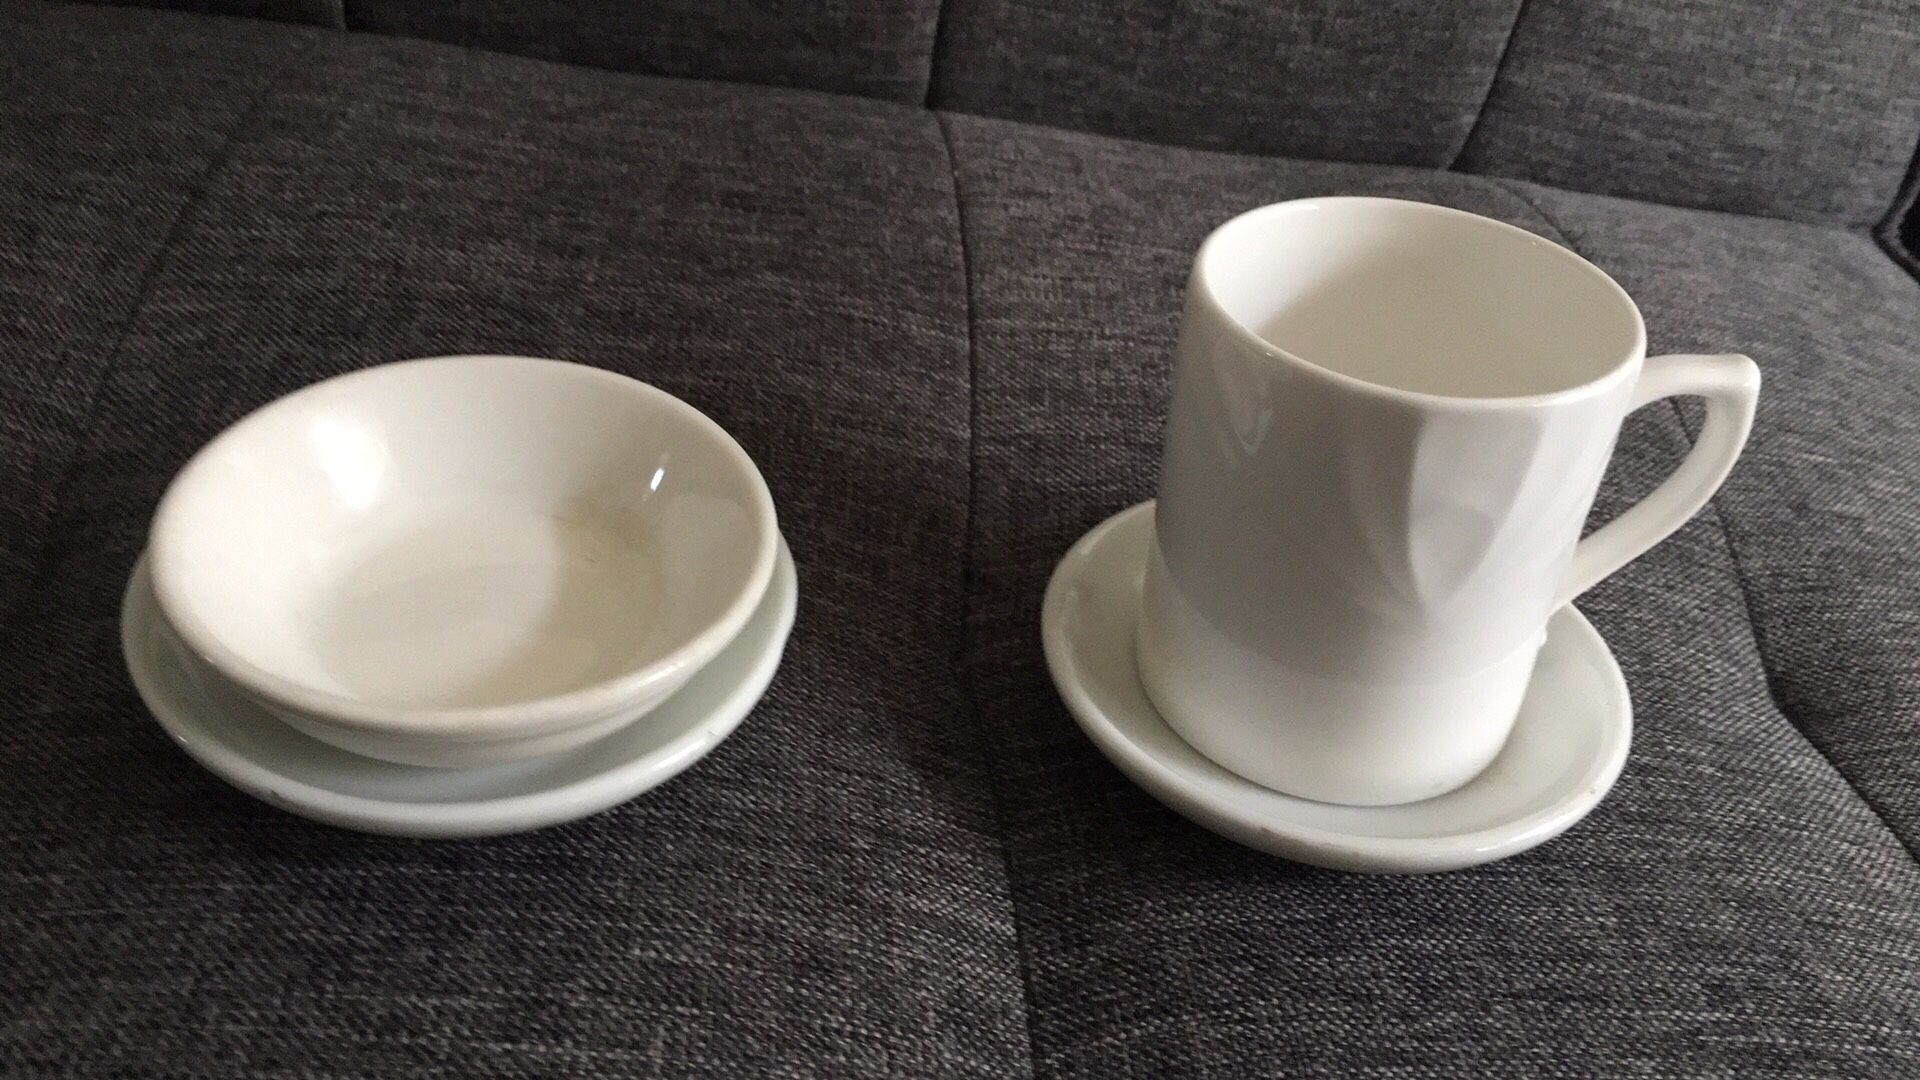 Porcelain plates and mug